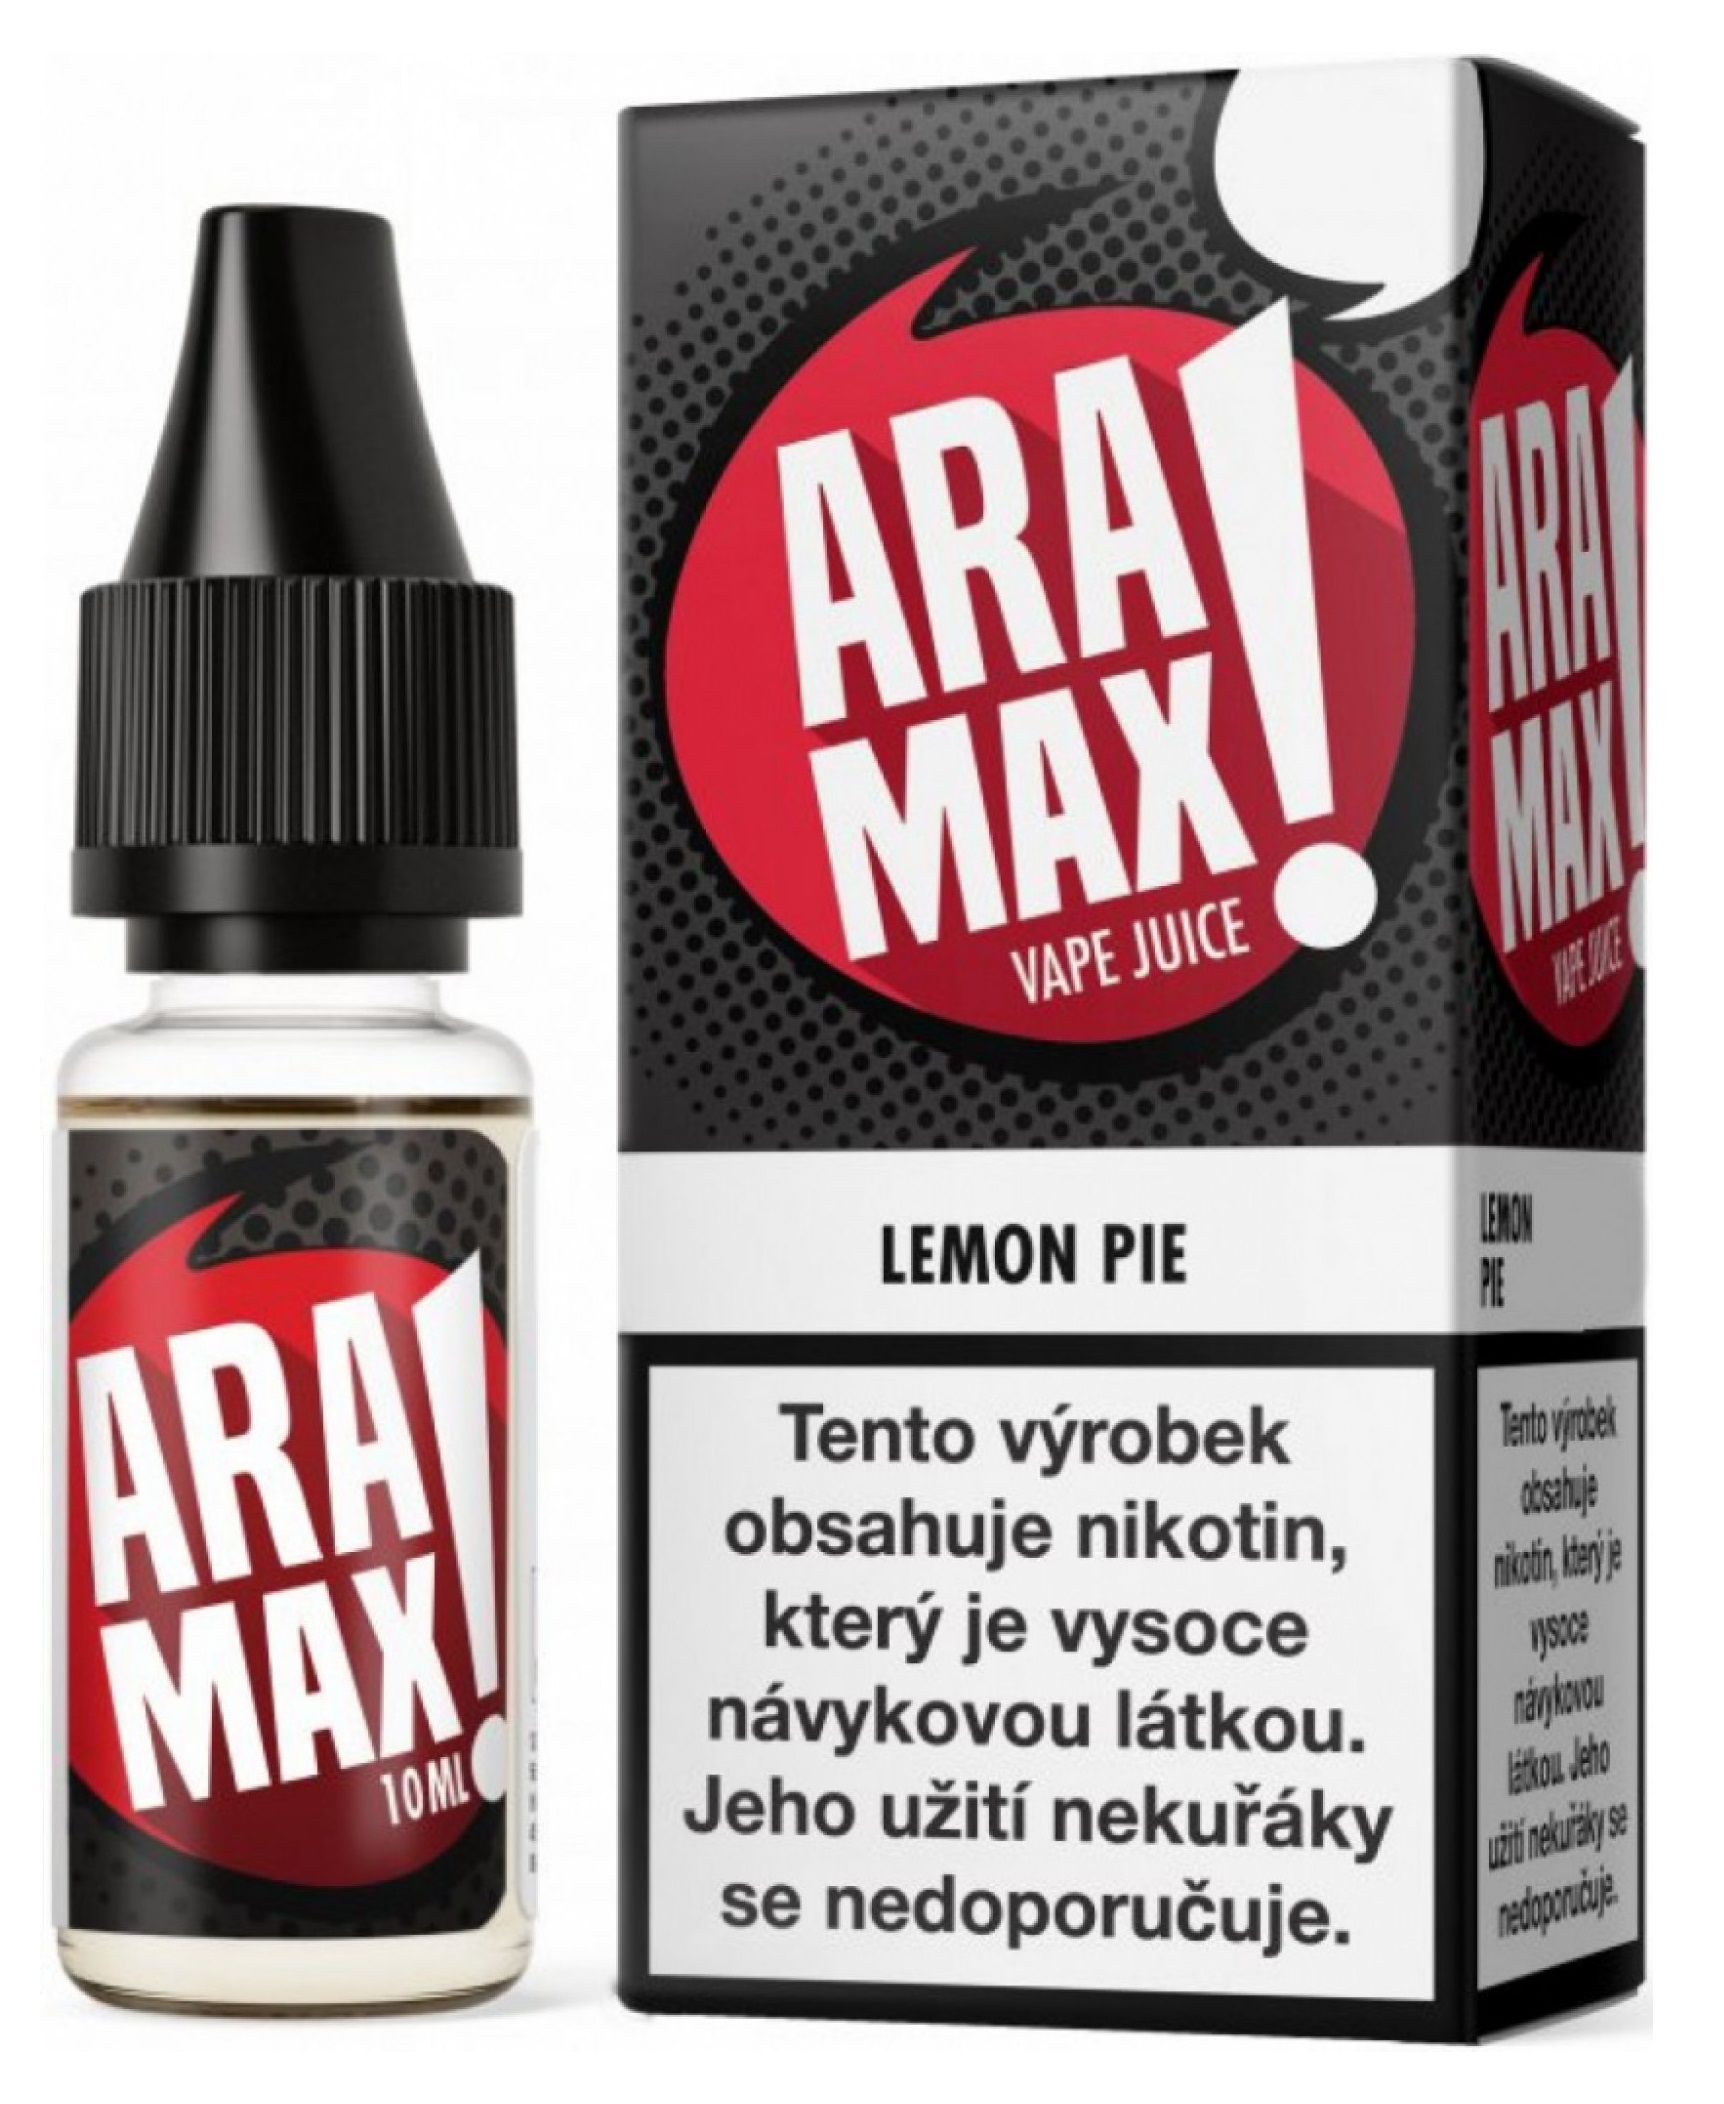 ARAMAX Lemon Pie 10ml Množství nikotinu: 0mg